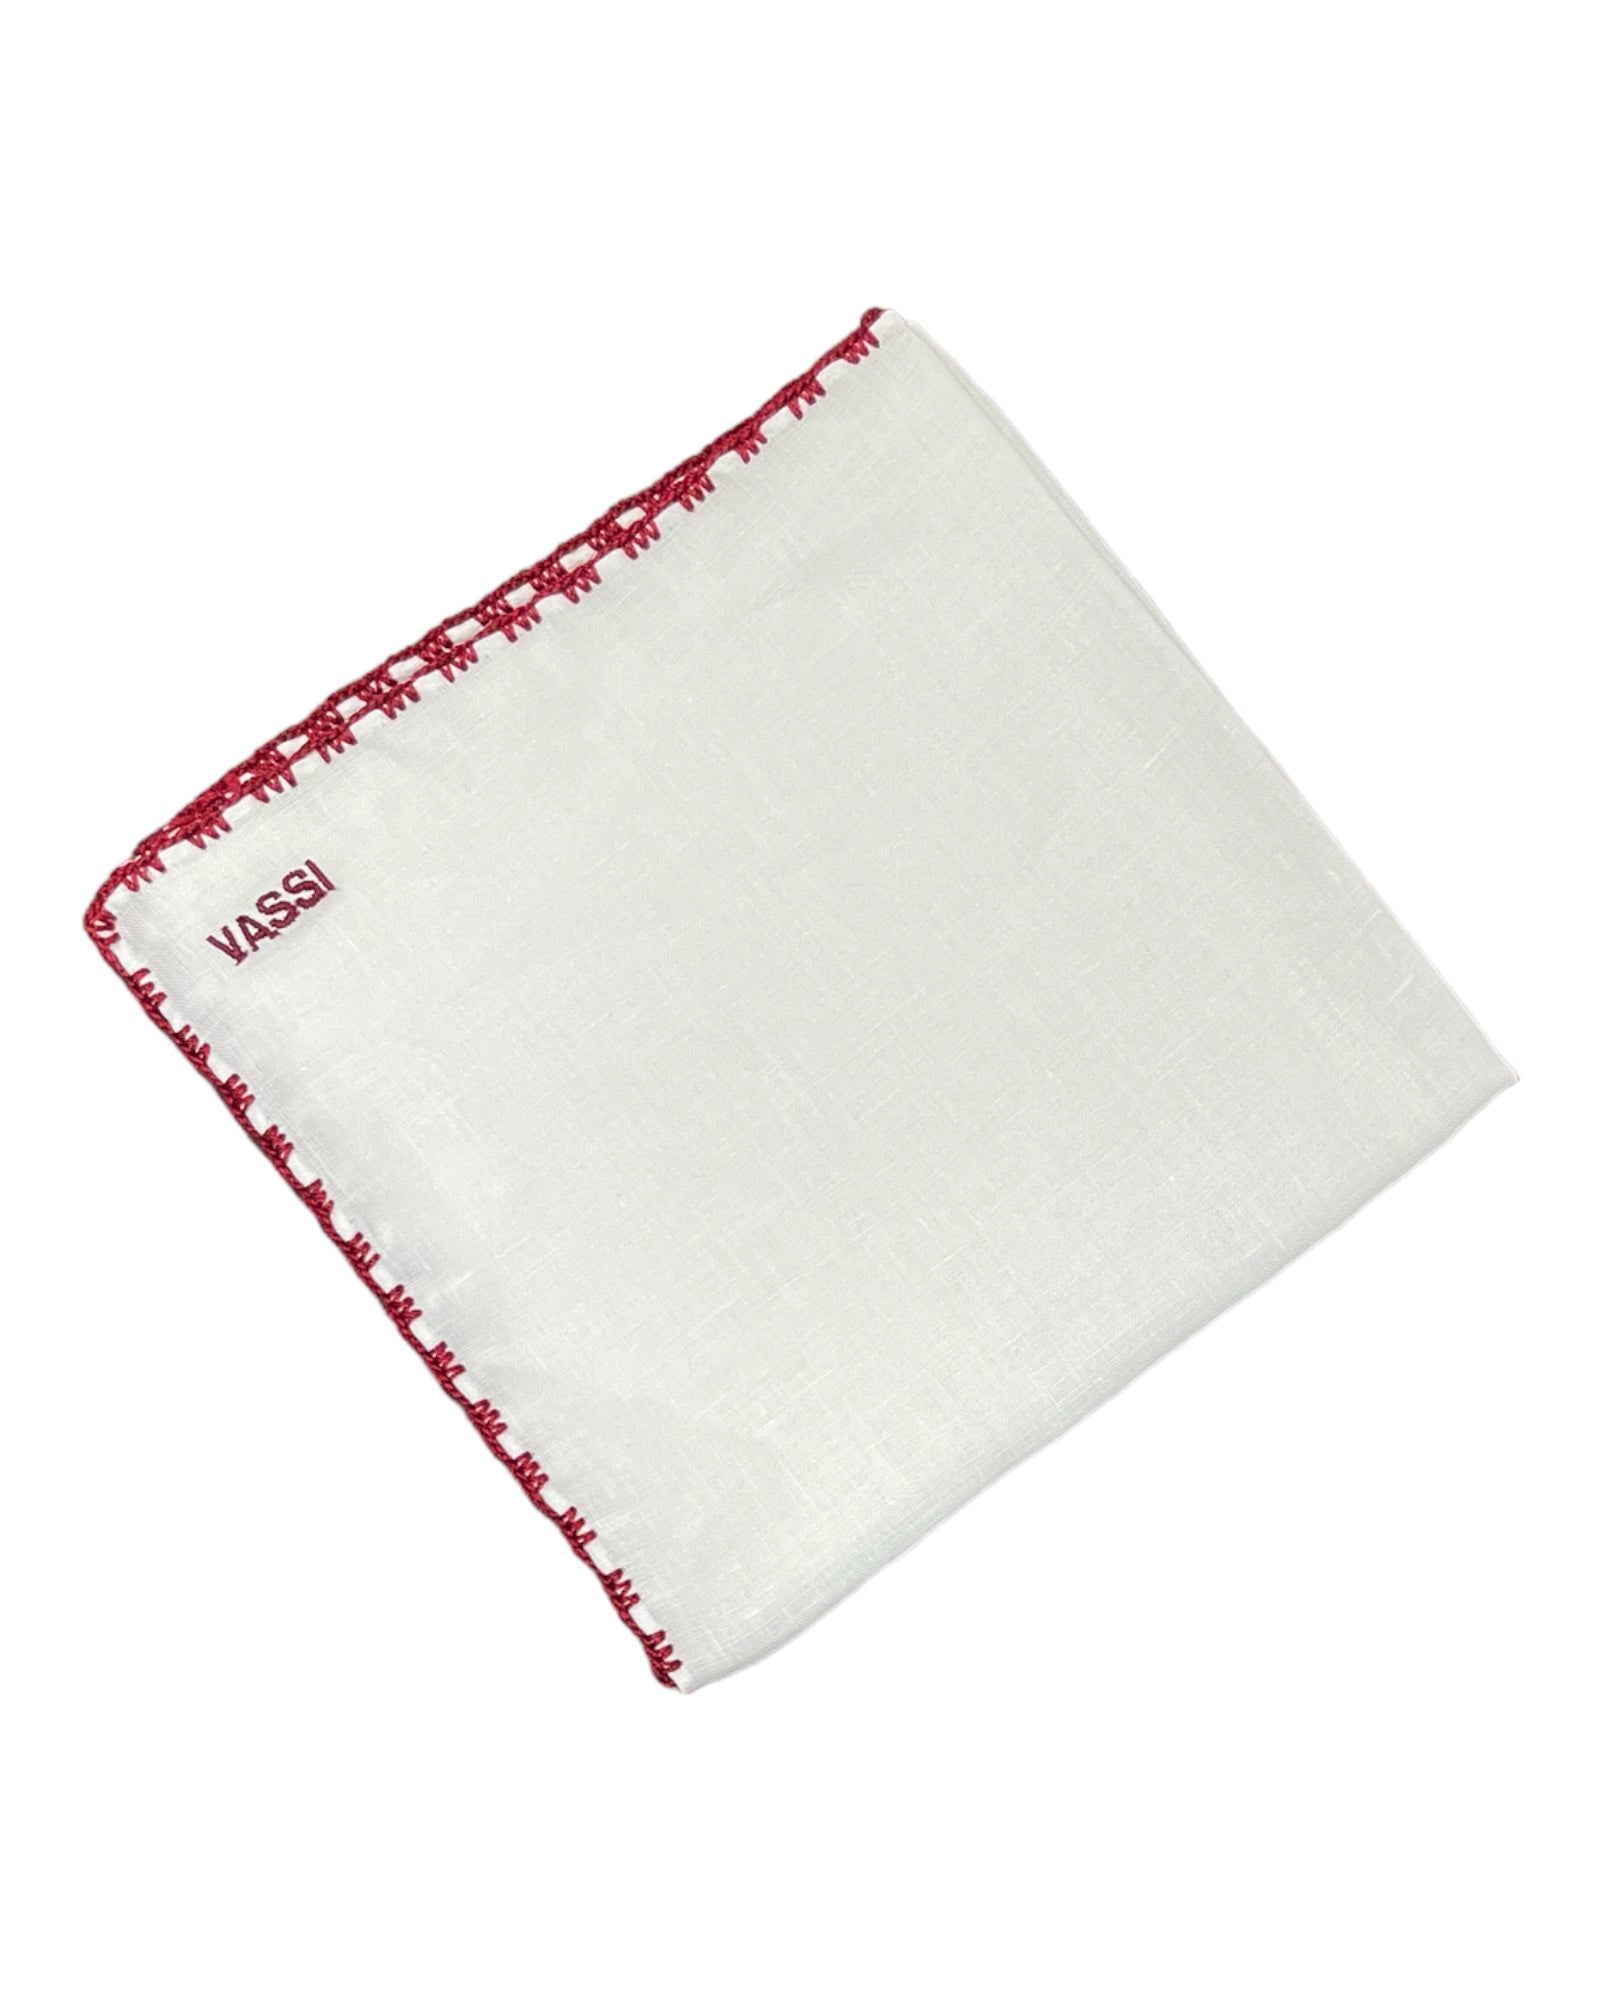 White Linen Pocket Square With Handrolled Triple V- Stitch Pocket SquareBurgundy